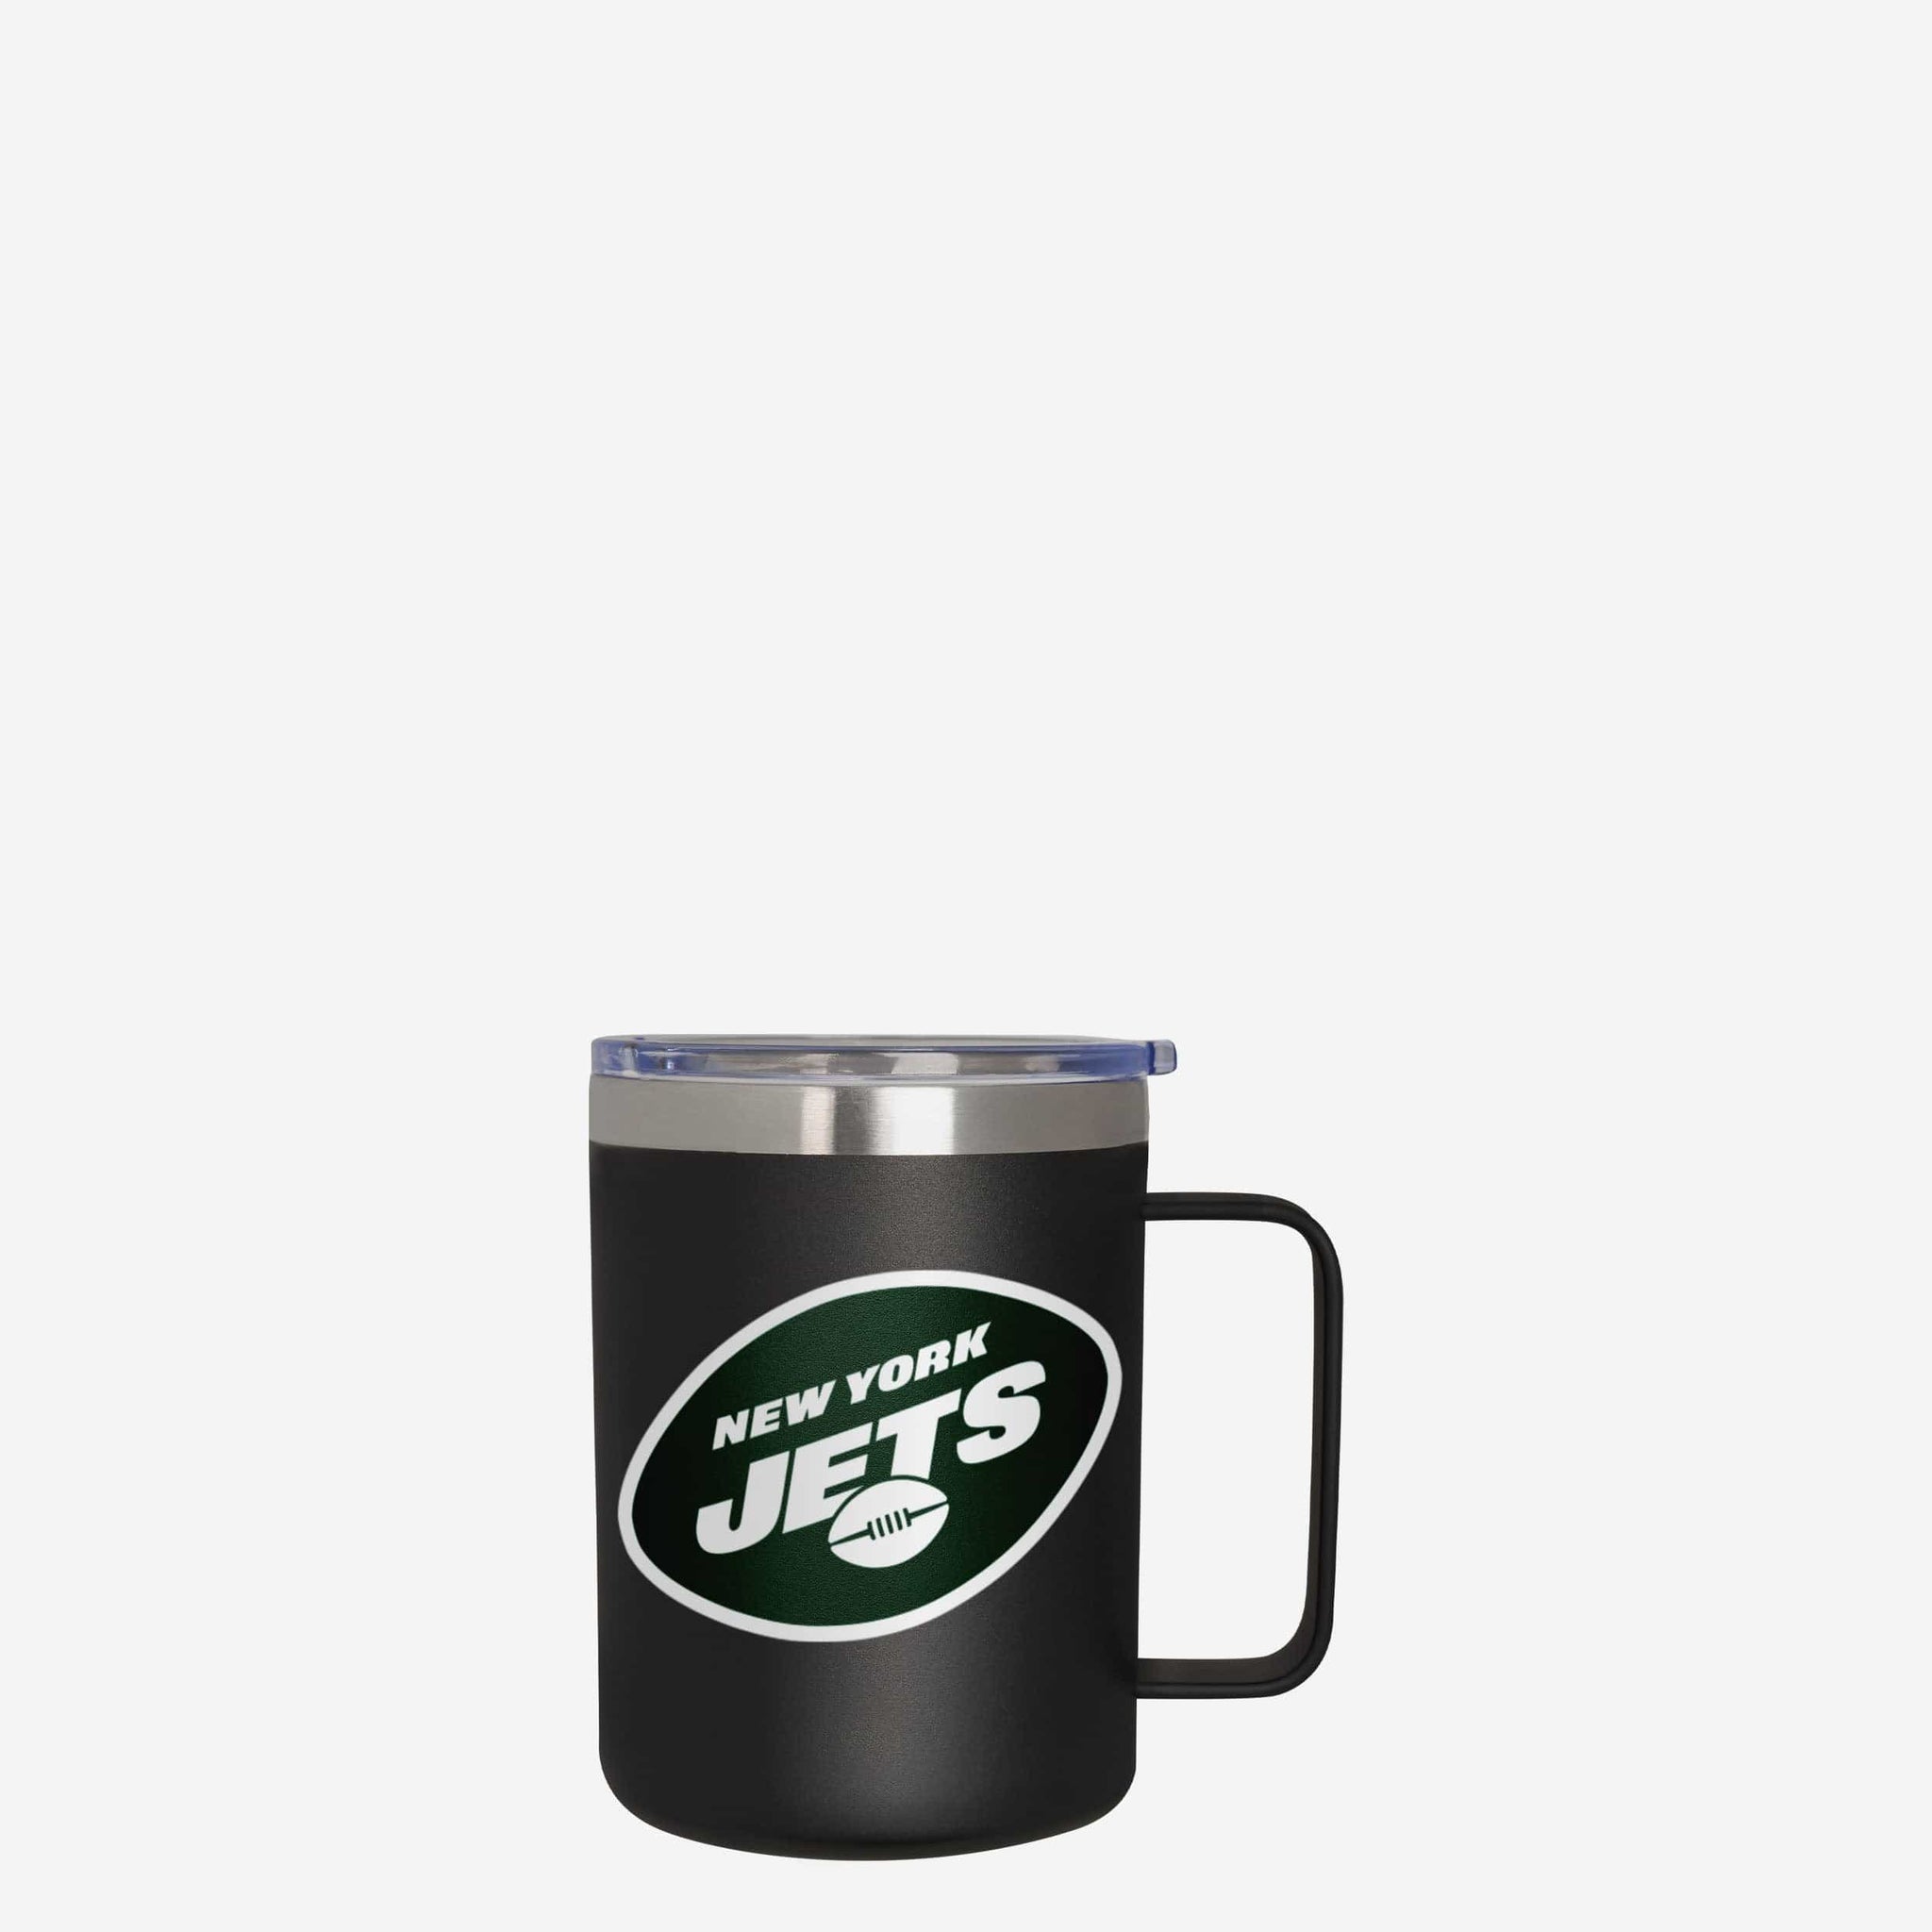 Pittsburgh Steelers Coffee Mug Travel Tumbler - FAST Shipping